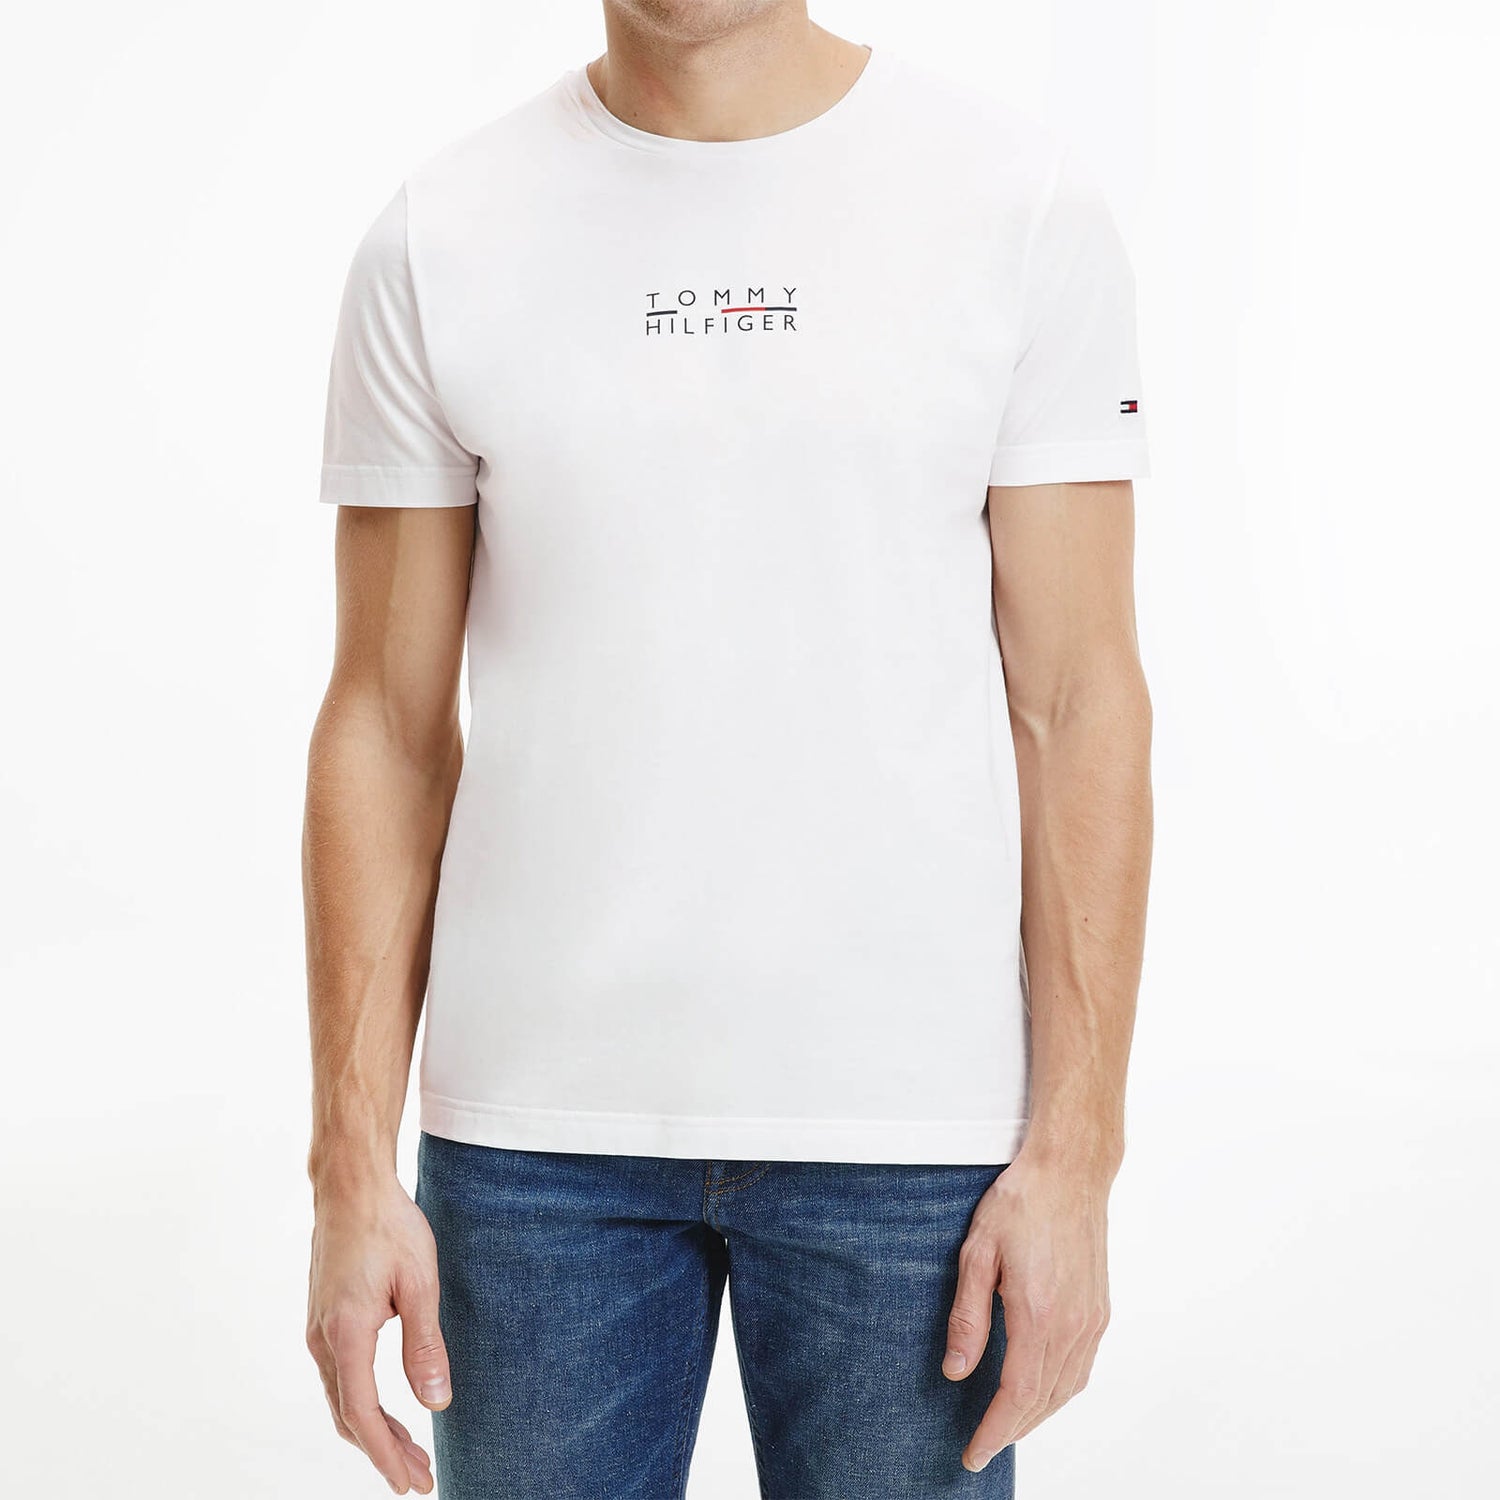 Tommy Hilfiger Men's Square Logo T-Shirt - White - M